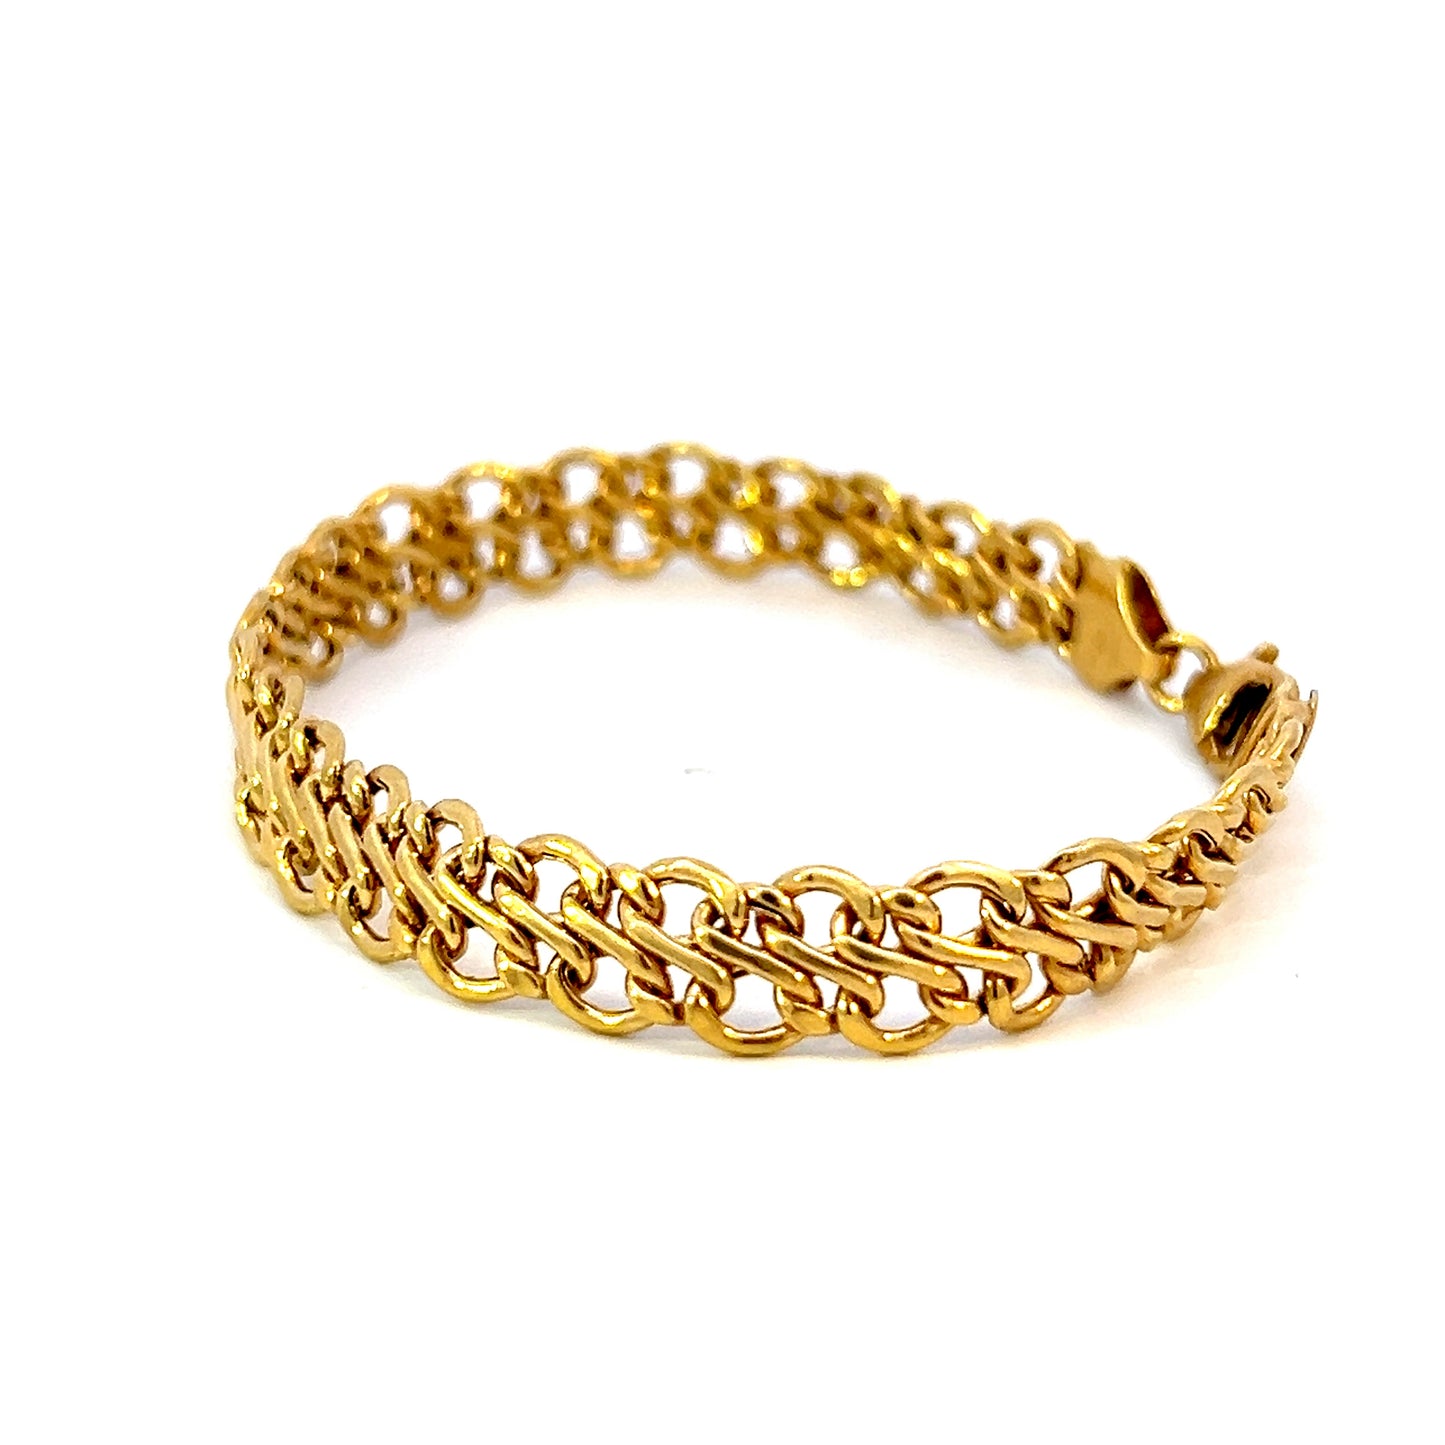 6.5" Bismark Link Bracelet - 18k - Yellow Gold